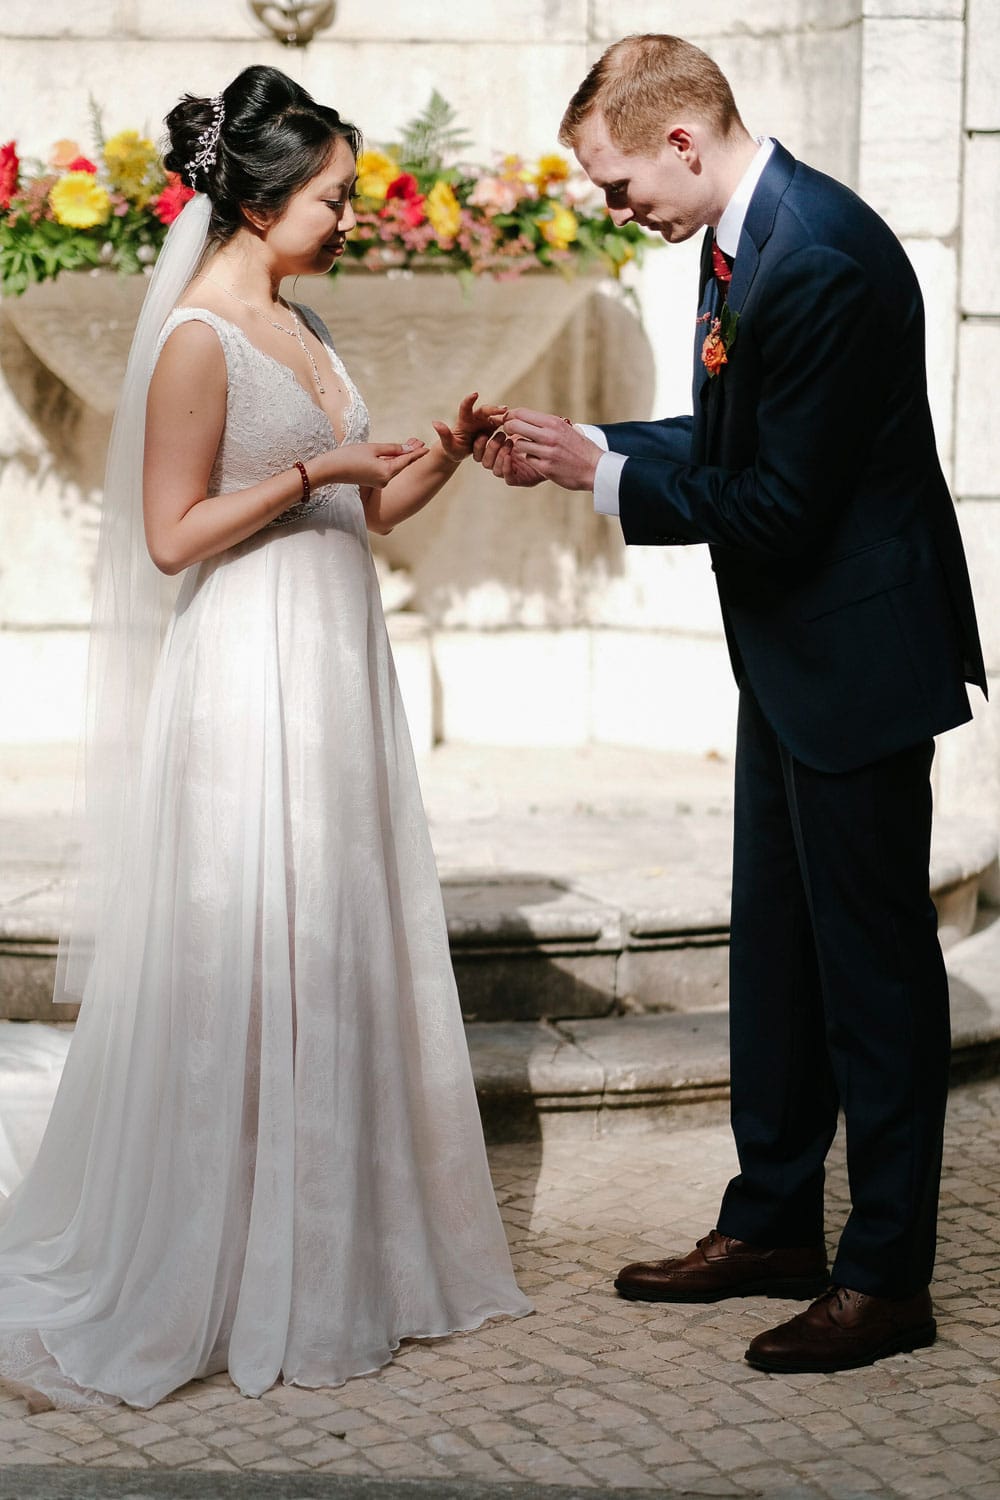 rings exchange during intimate wedding in lisbon